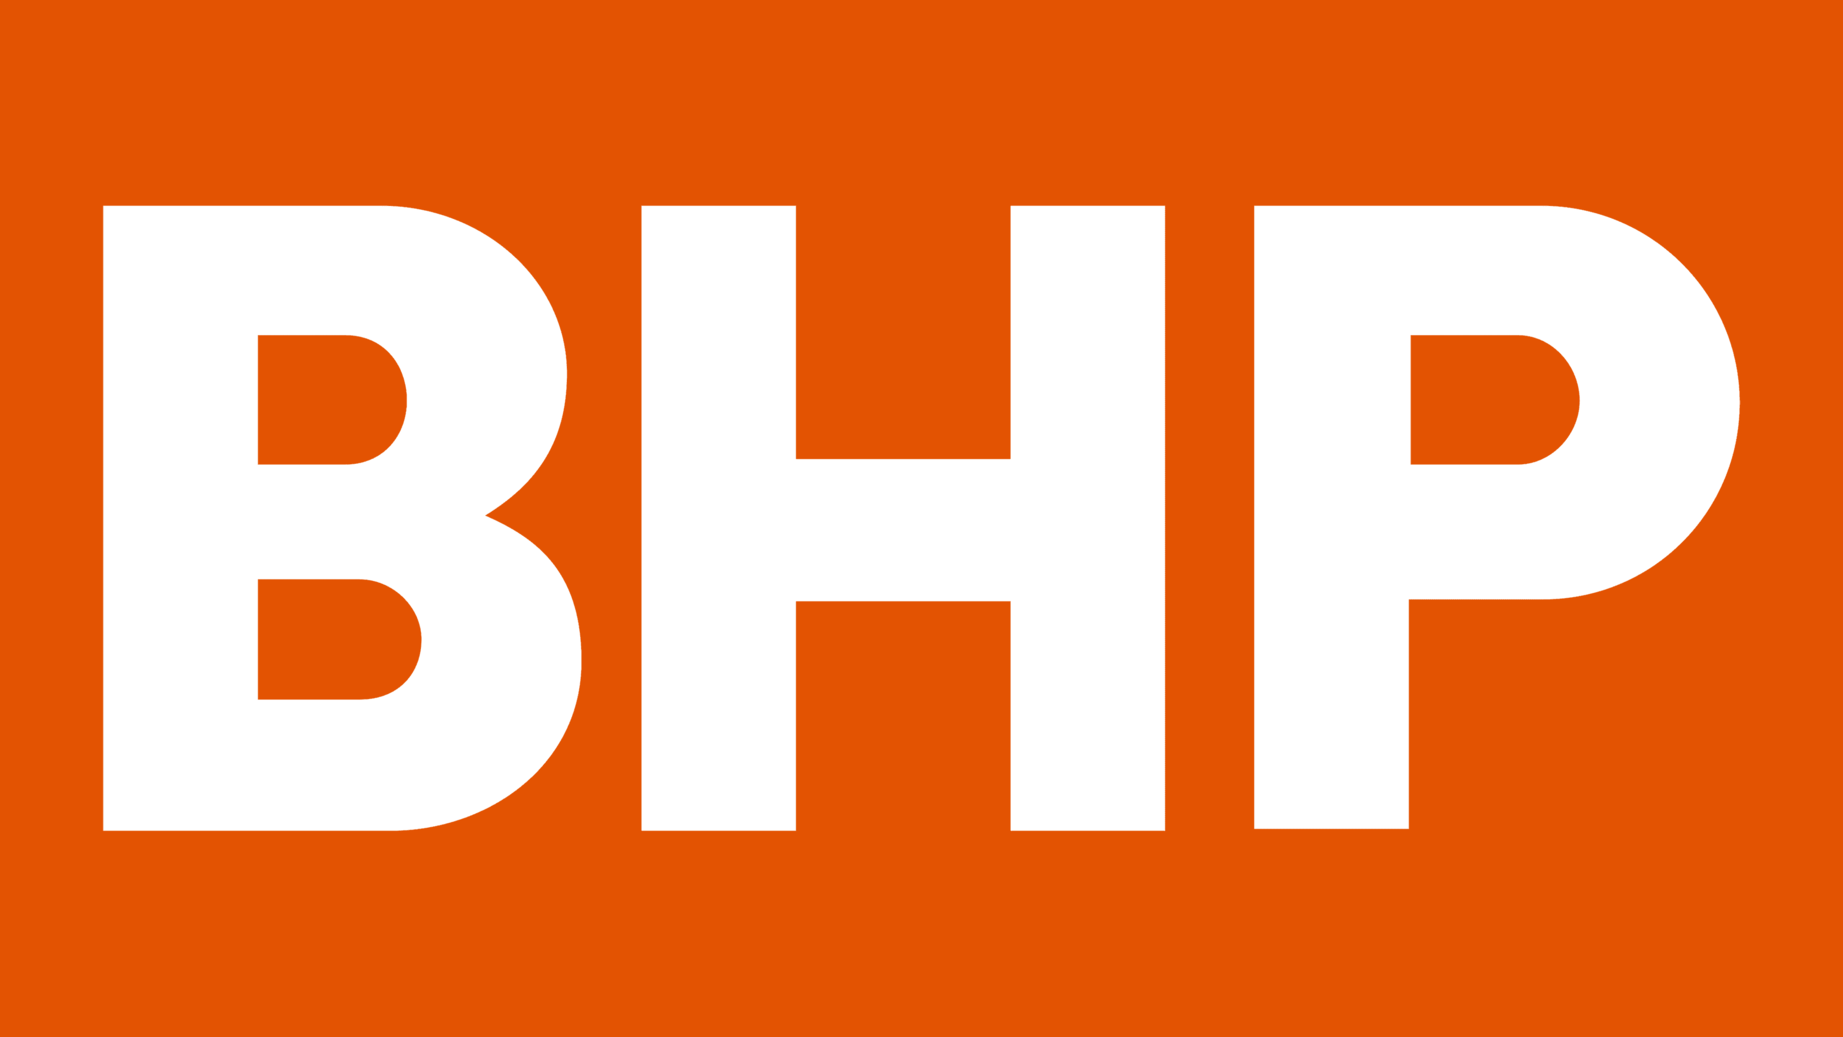 Bhp logo